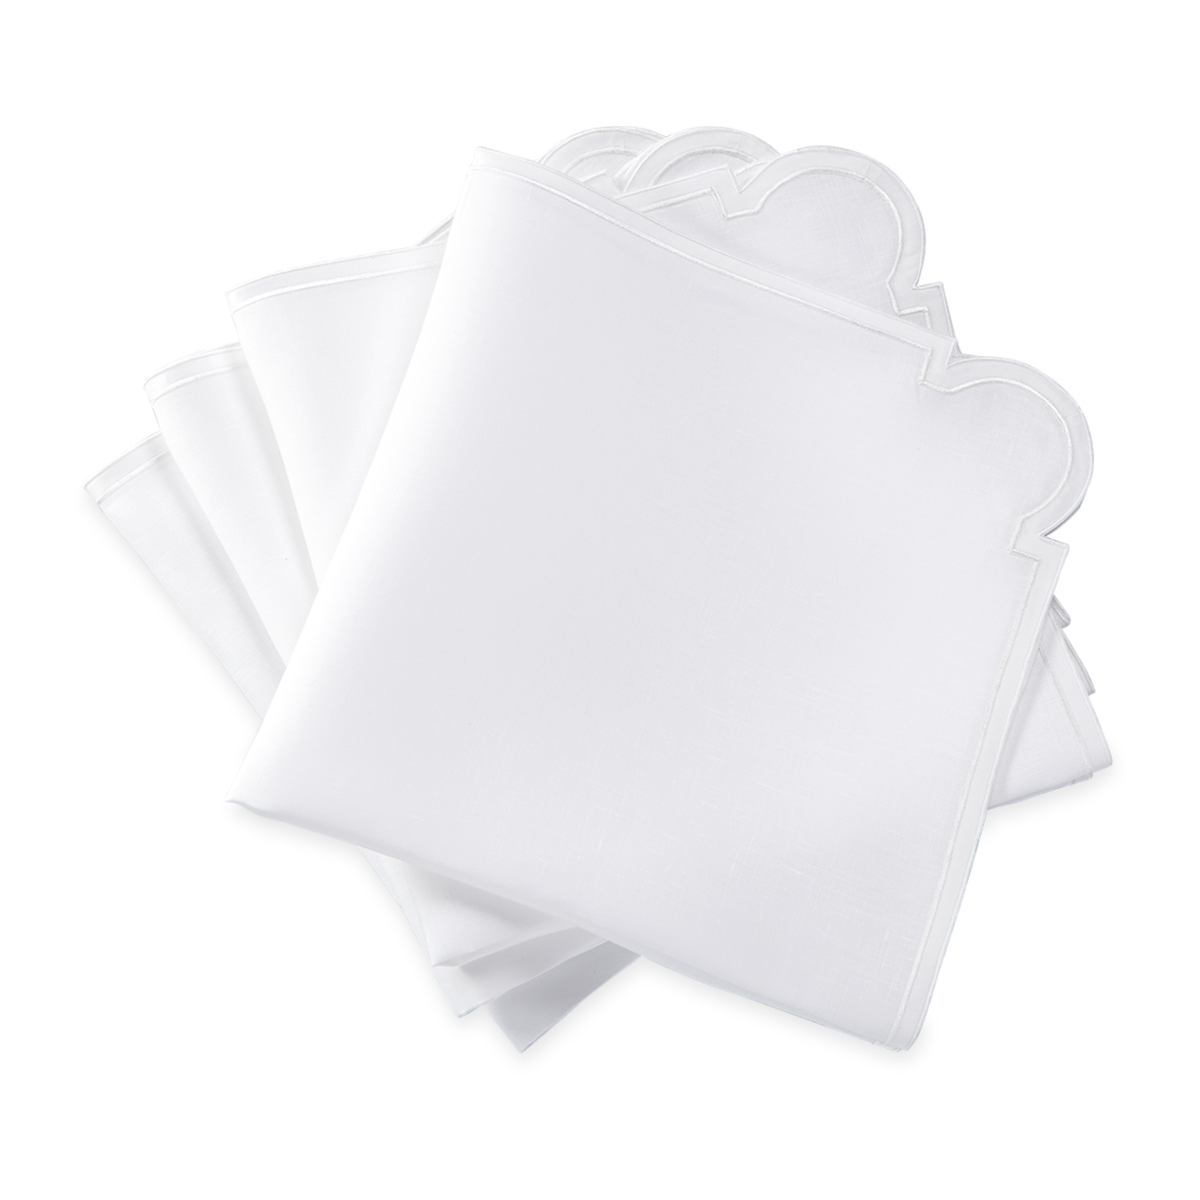 Stack of Matouk Mirasol Table Linen Napkins in White Color